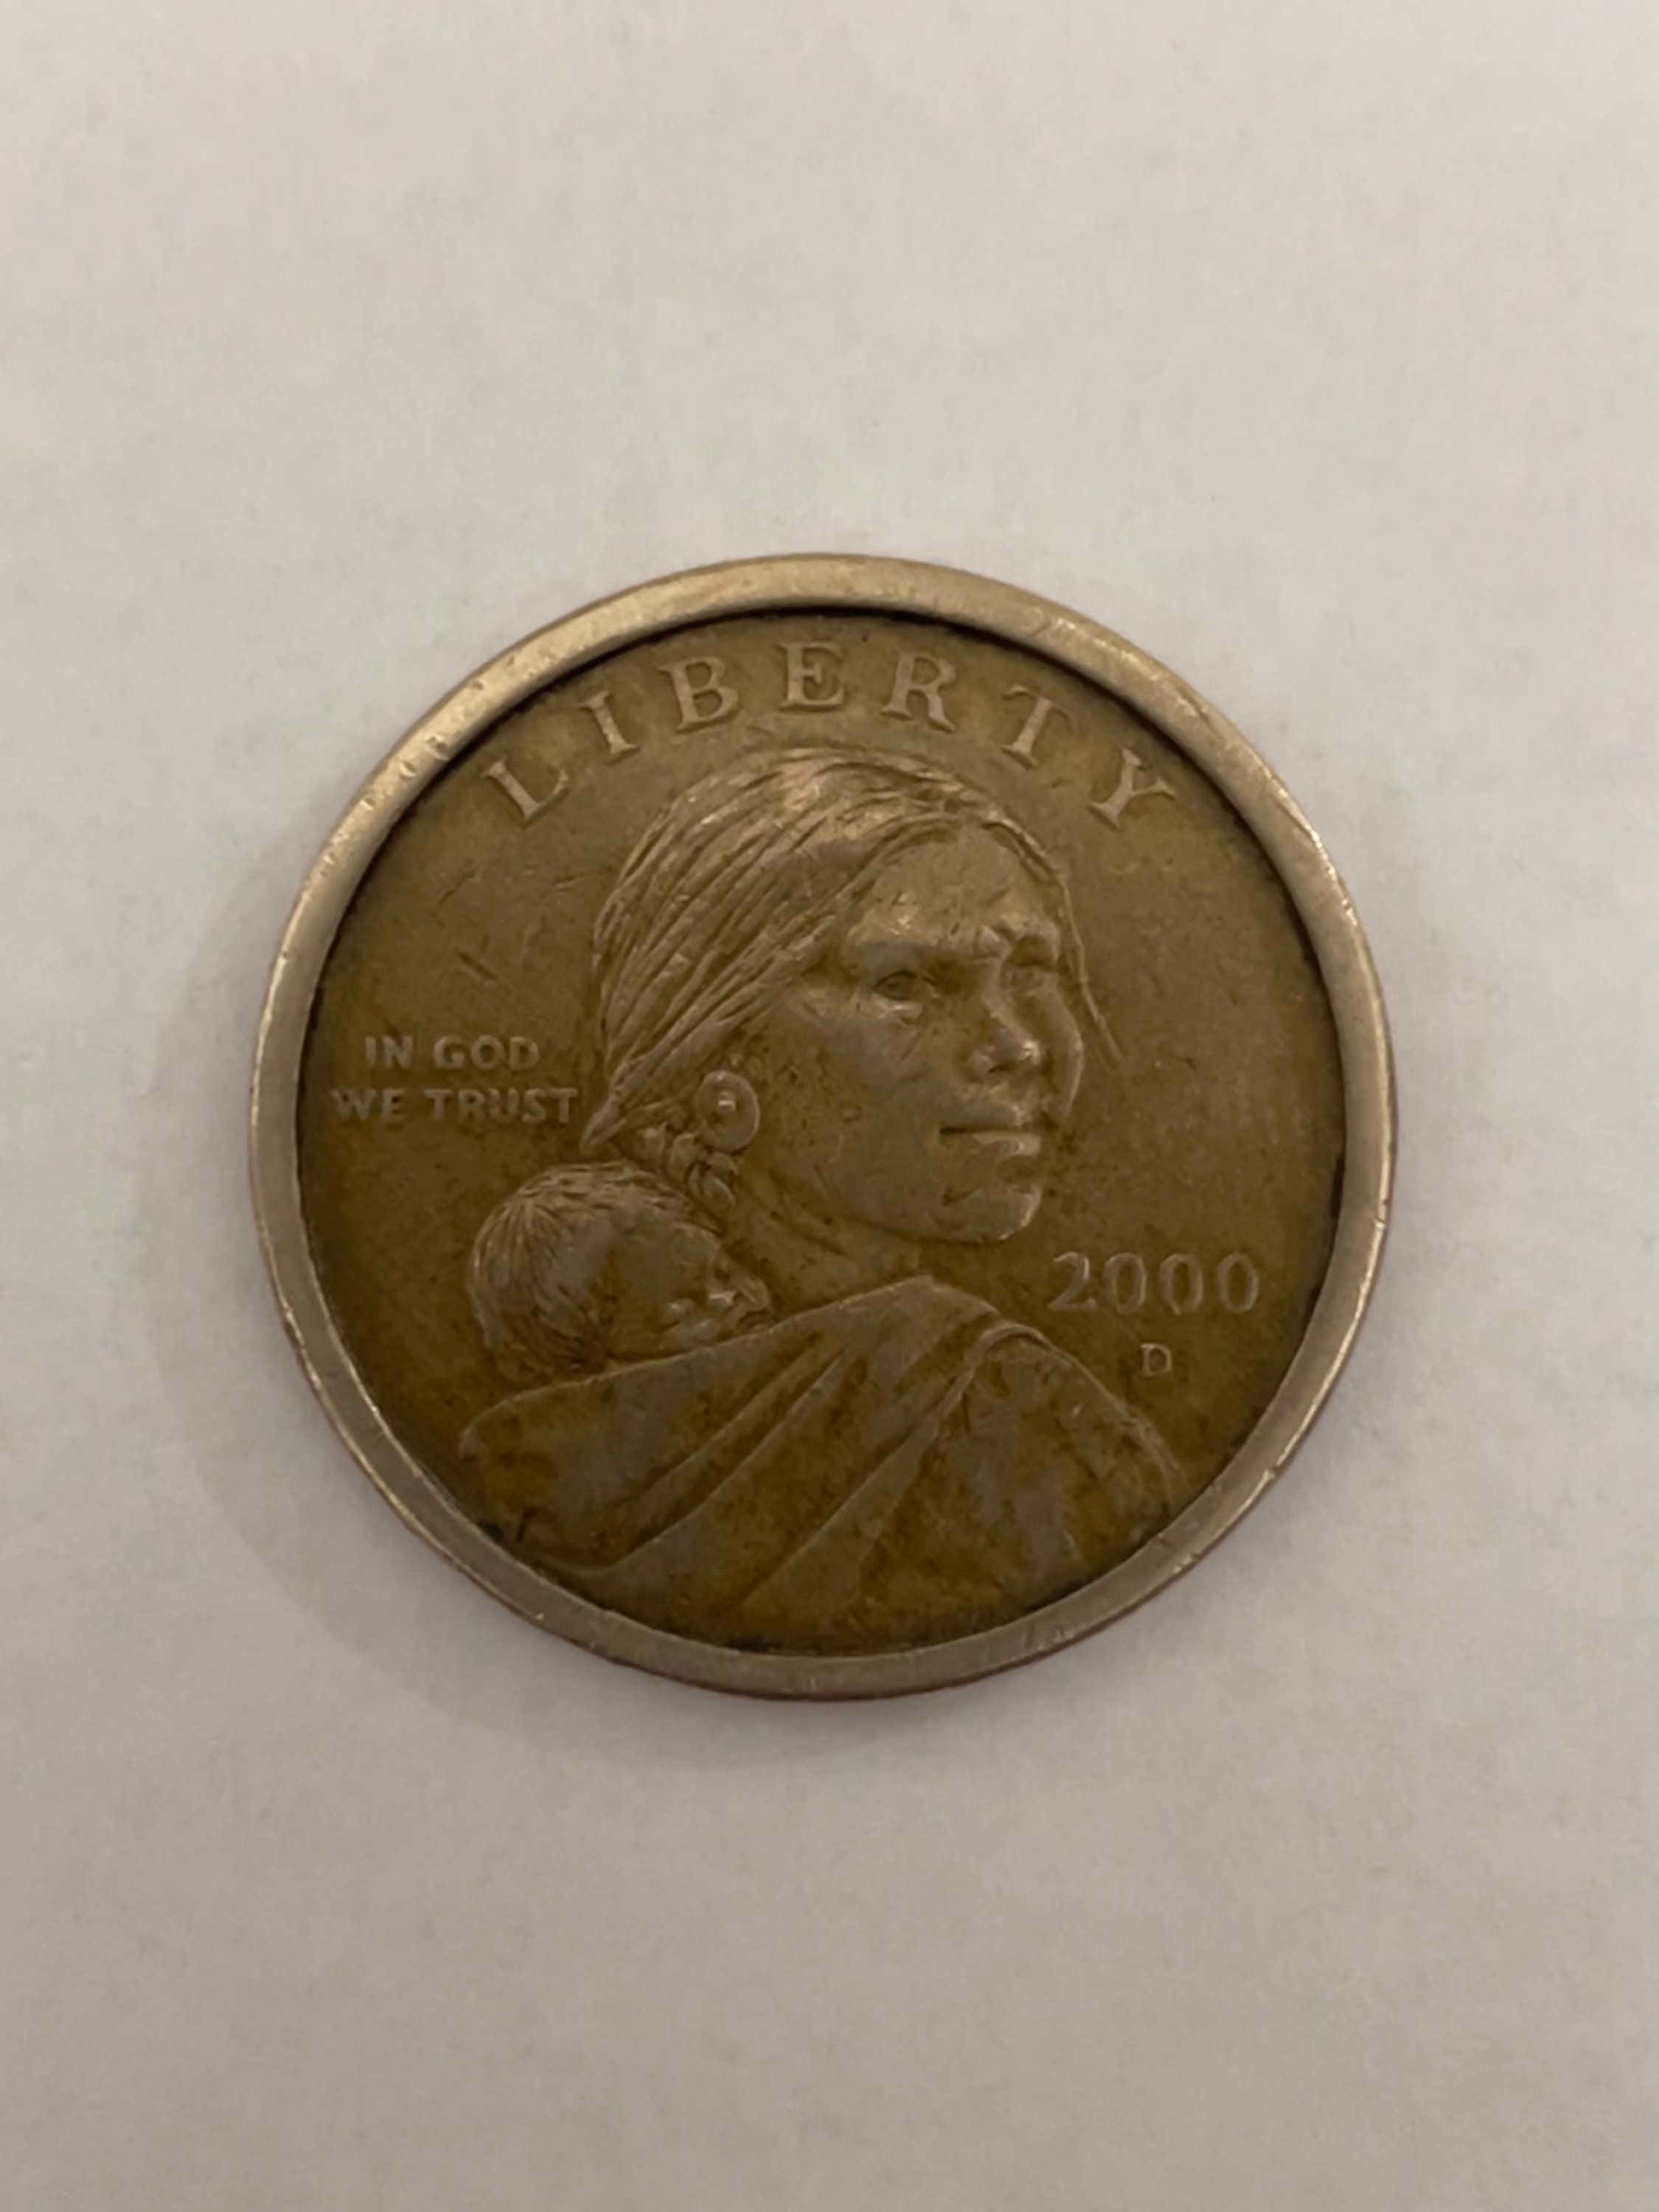 RARE Sacagawea 2000D Gold Dollar | Etsy